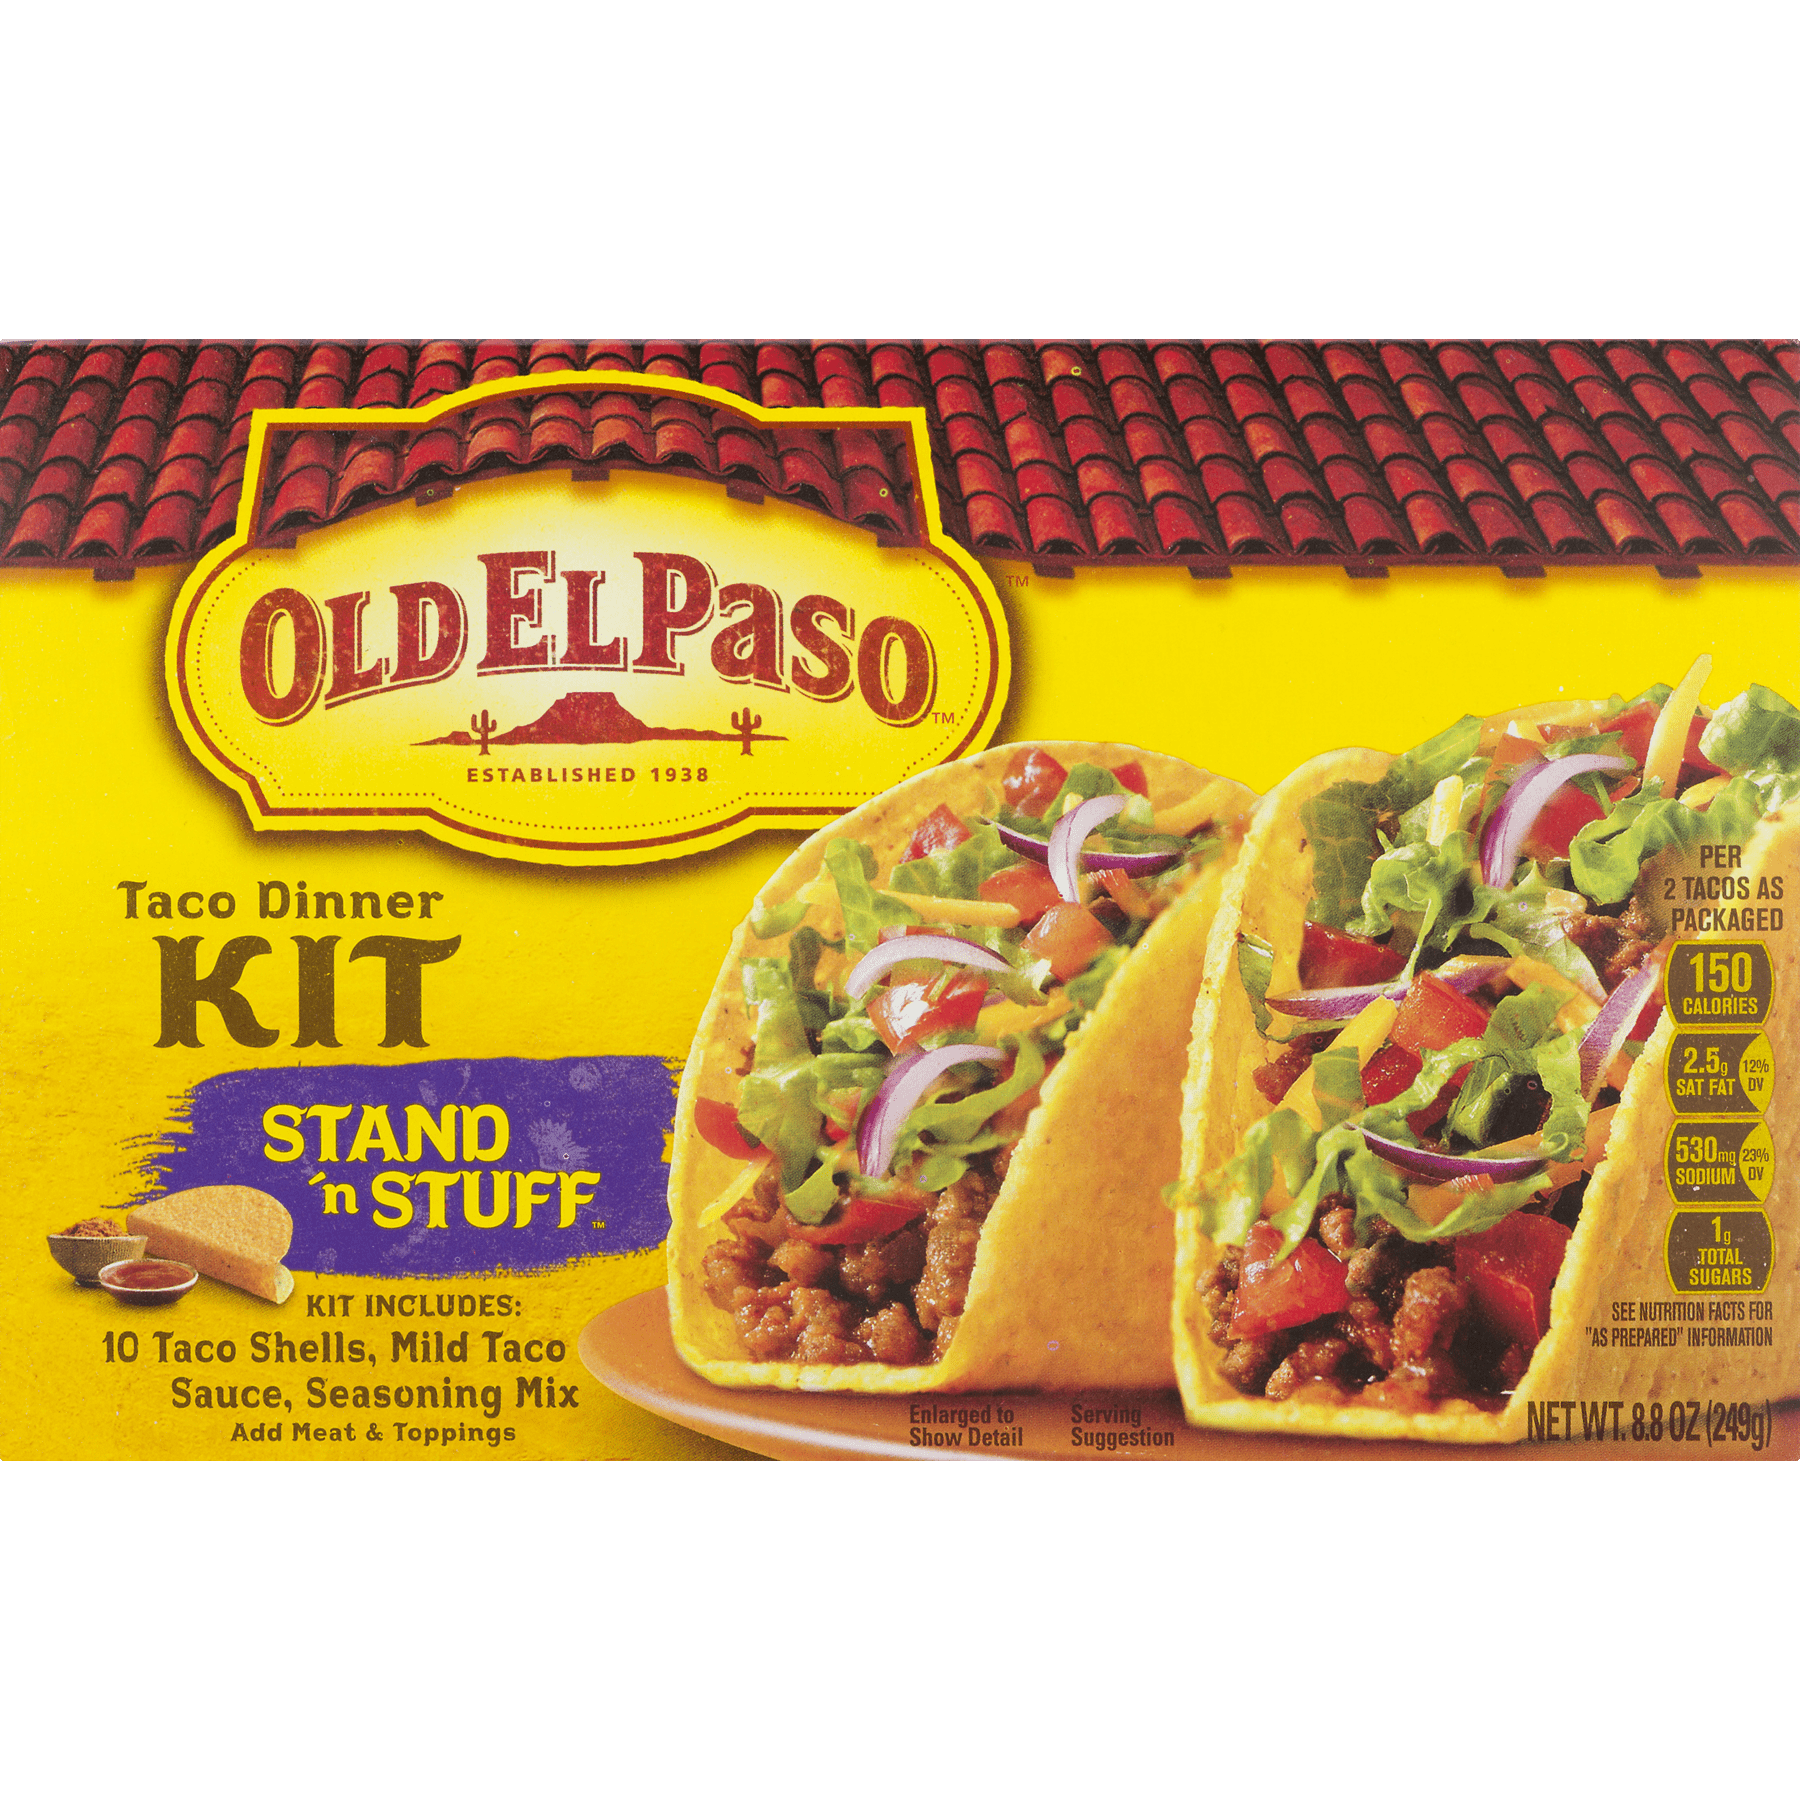 4 Pack Old El Pasoa A A Stand N Stuff Taco Dinner Kit 8 8 Oz Box 8 8 Oz Walmart Com Walmart Com